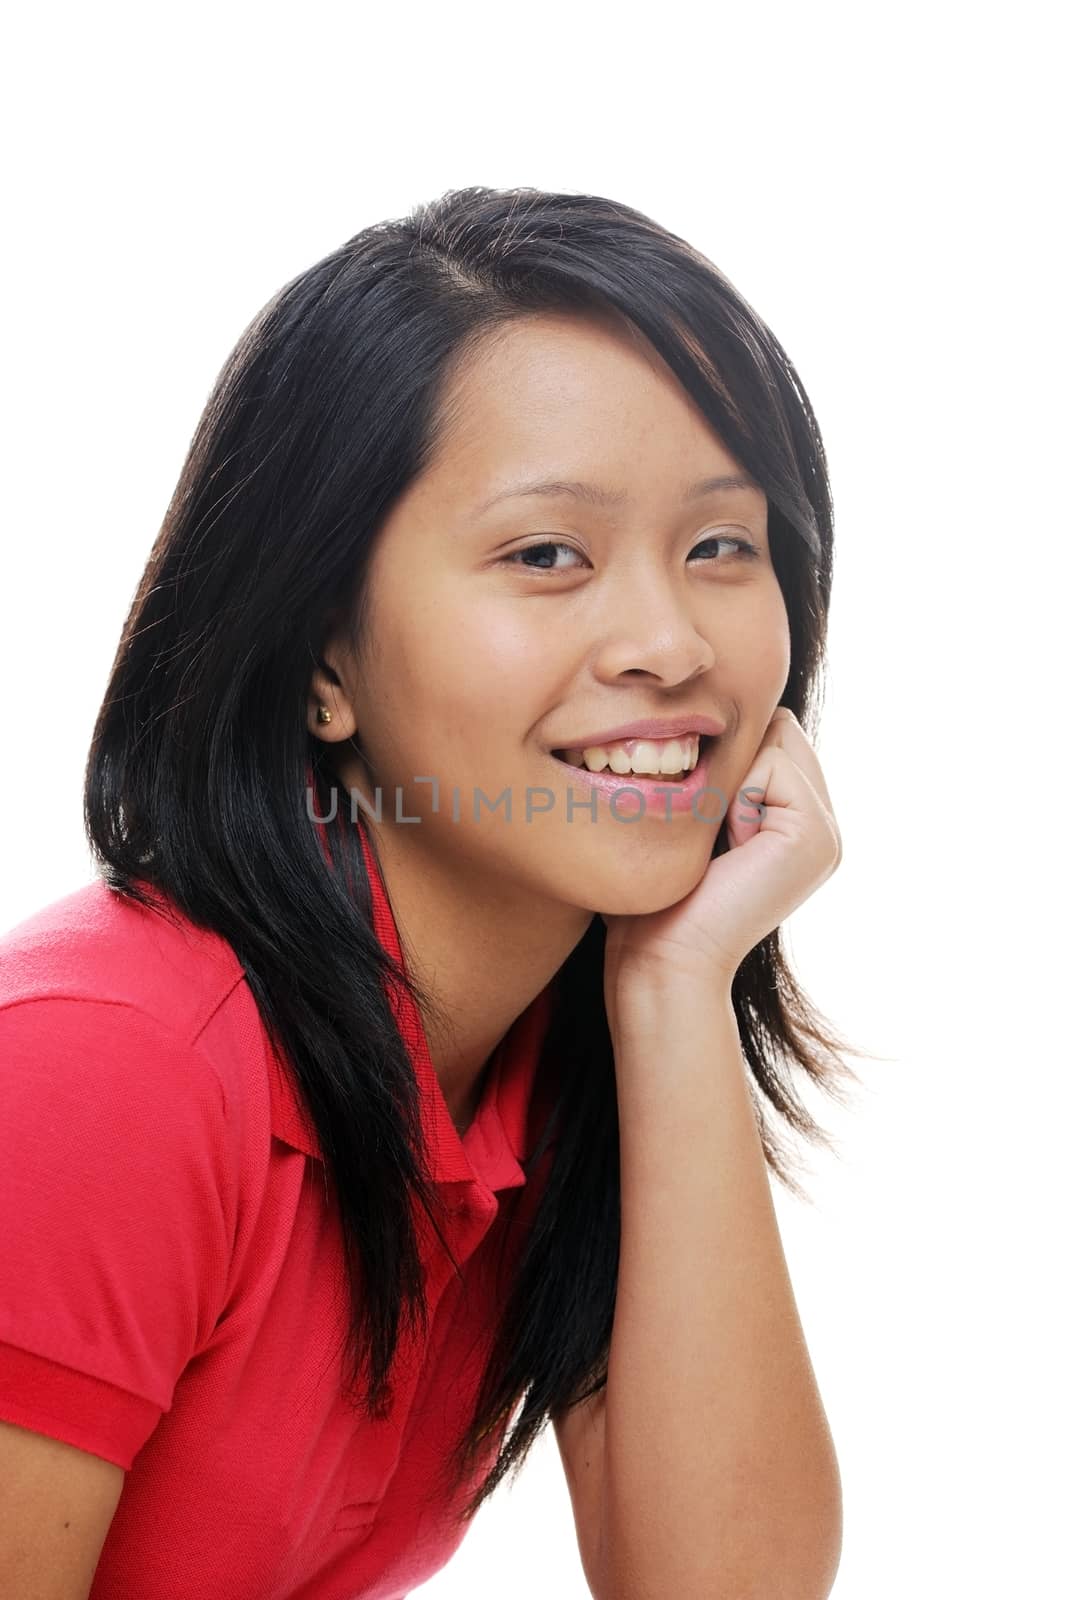 Smiling asian girl wearing a red shirt